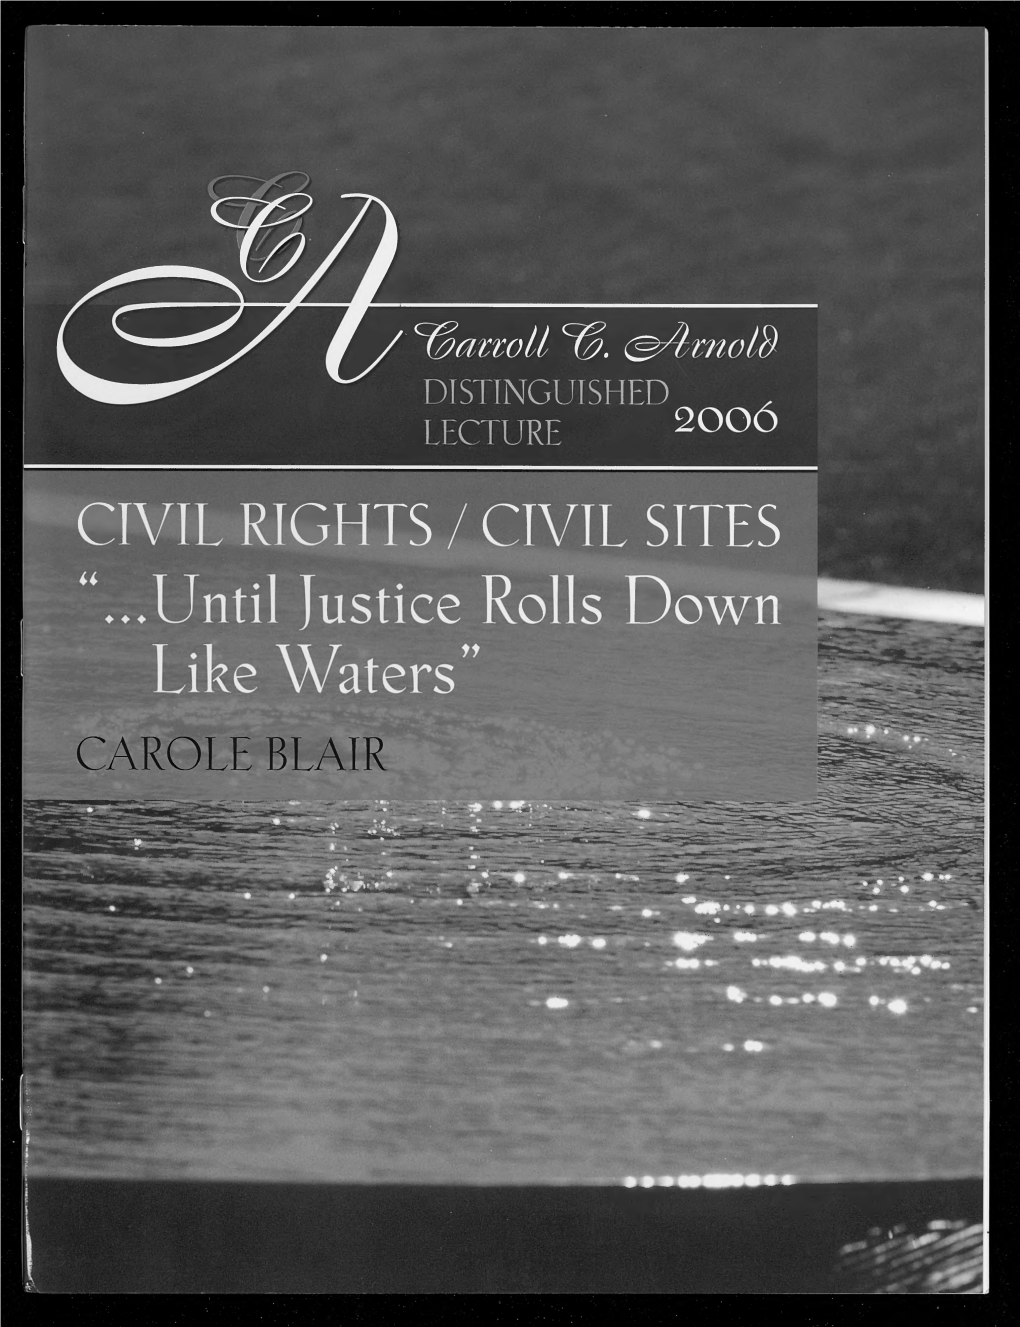 Civil Rights/Civil Sites: "...Until Justice Rolls Down Like Waters"